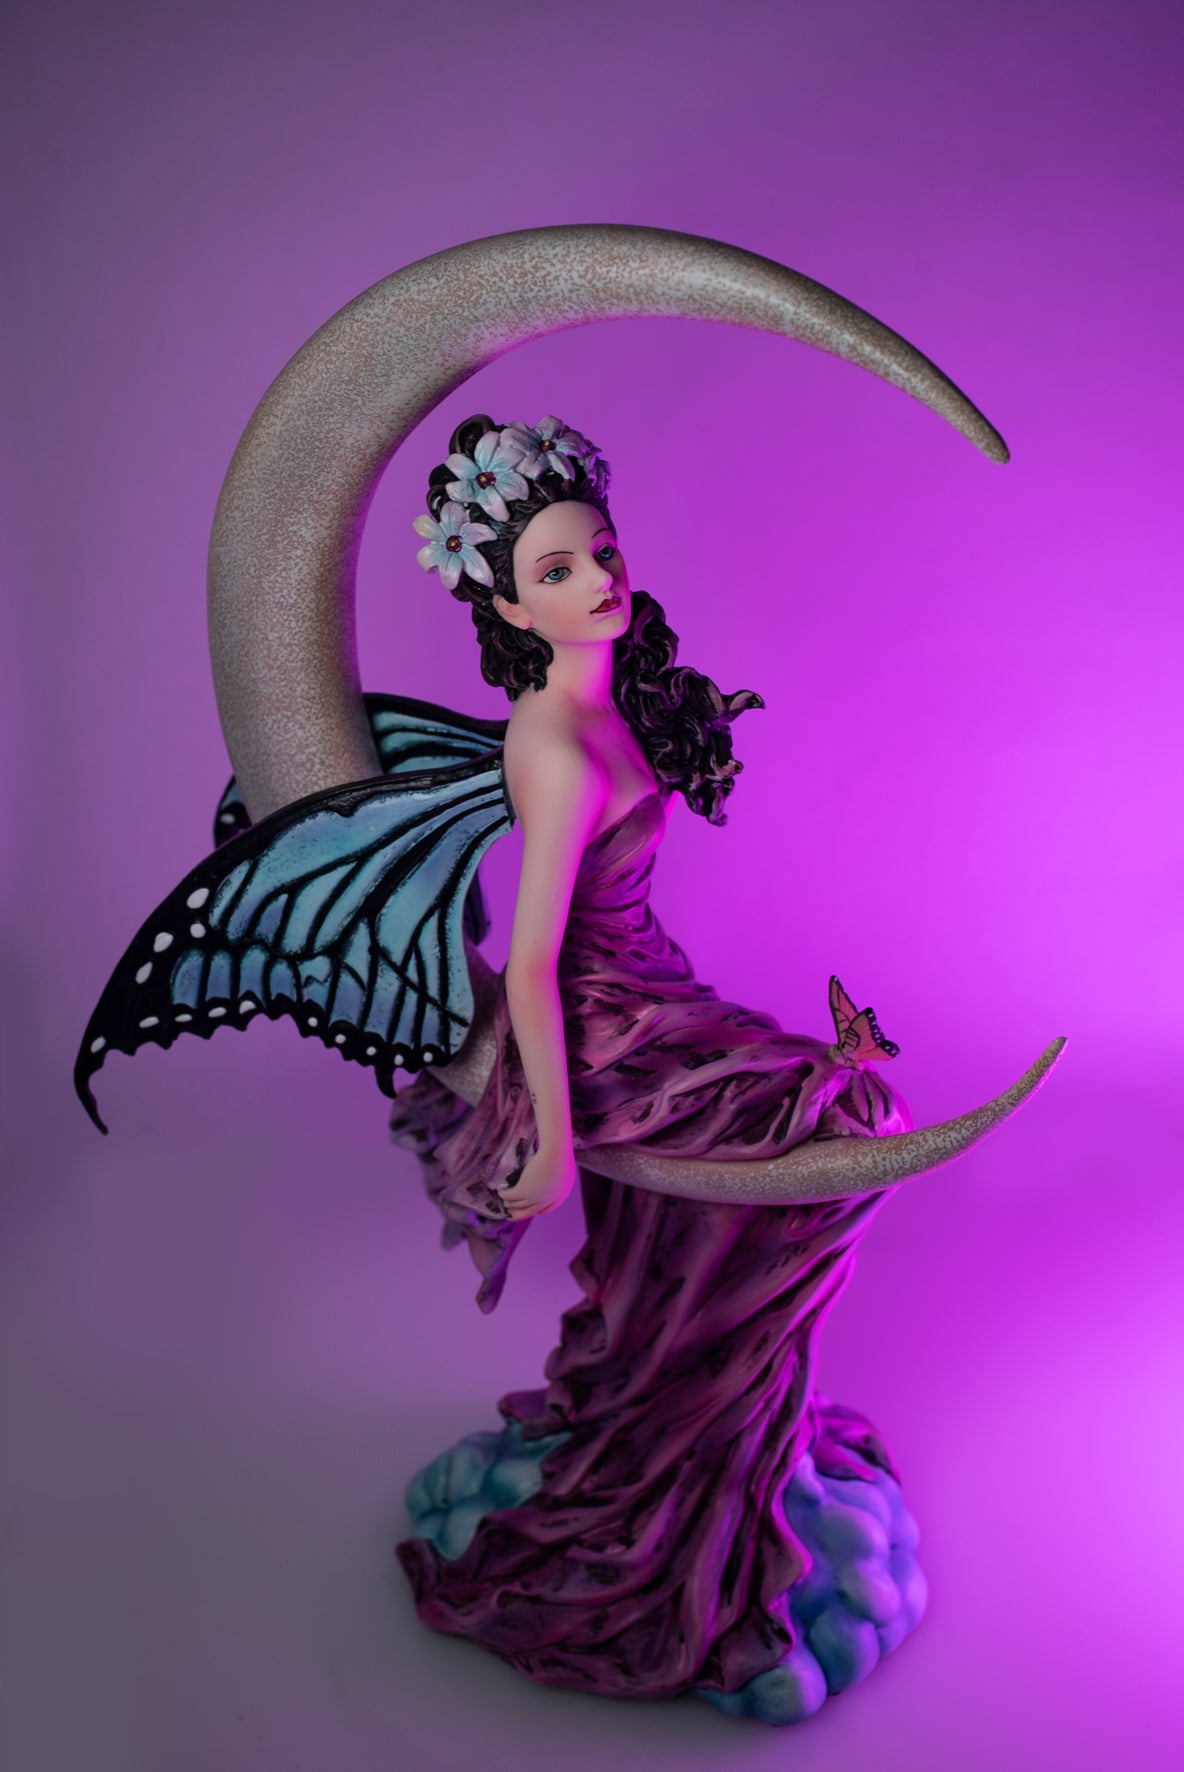 Amethyst Moon Faery Figurine by Nene Thomas - Rivendell Shop